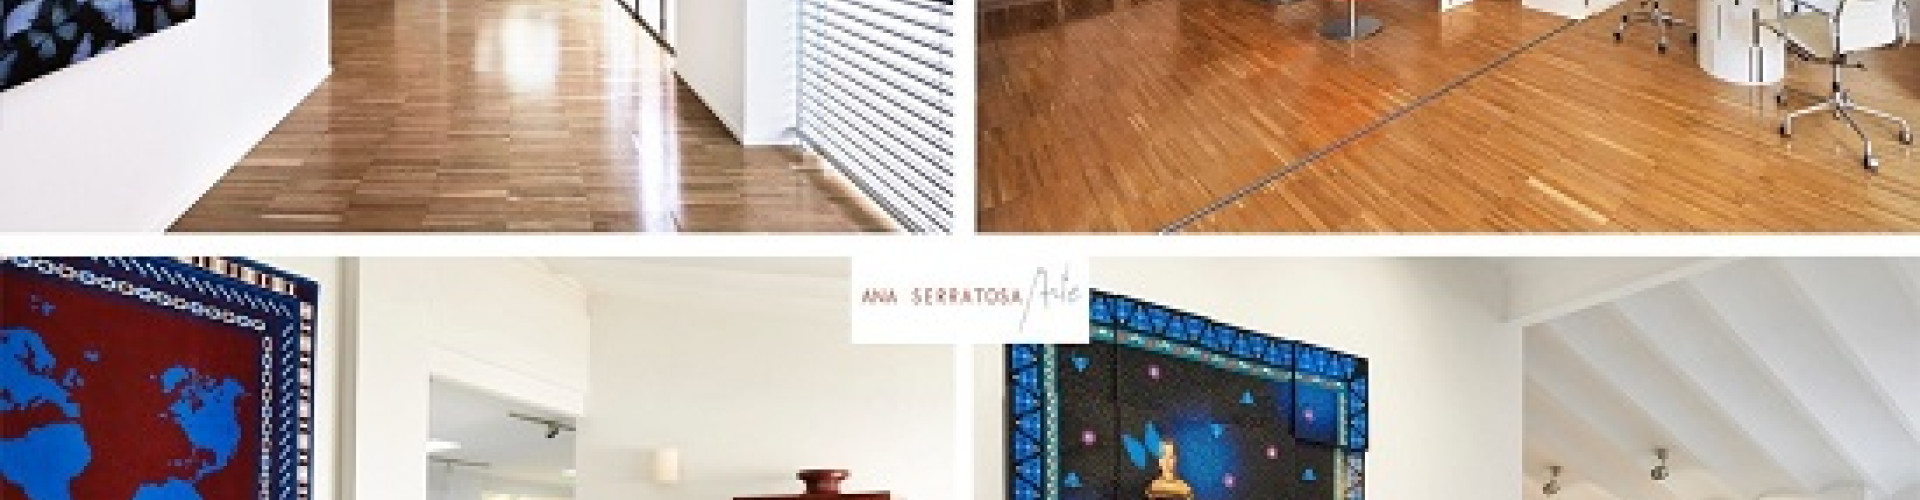 Galería Ana Serratosa